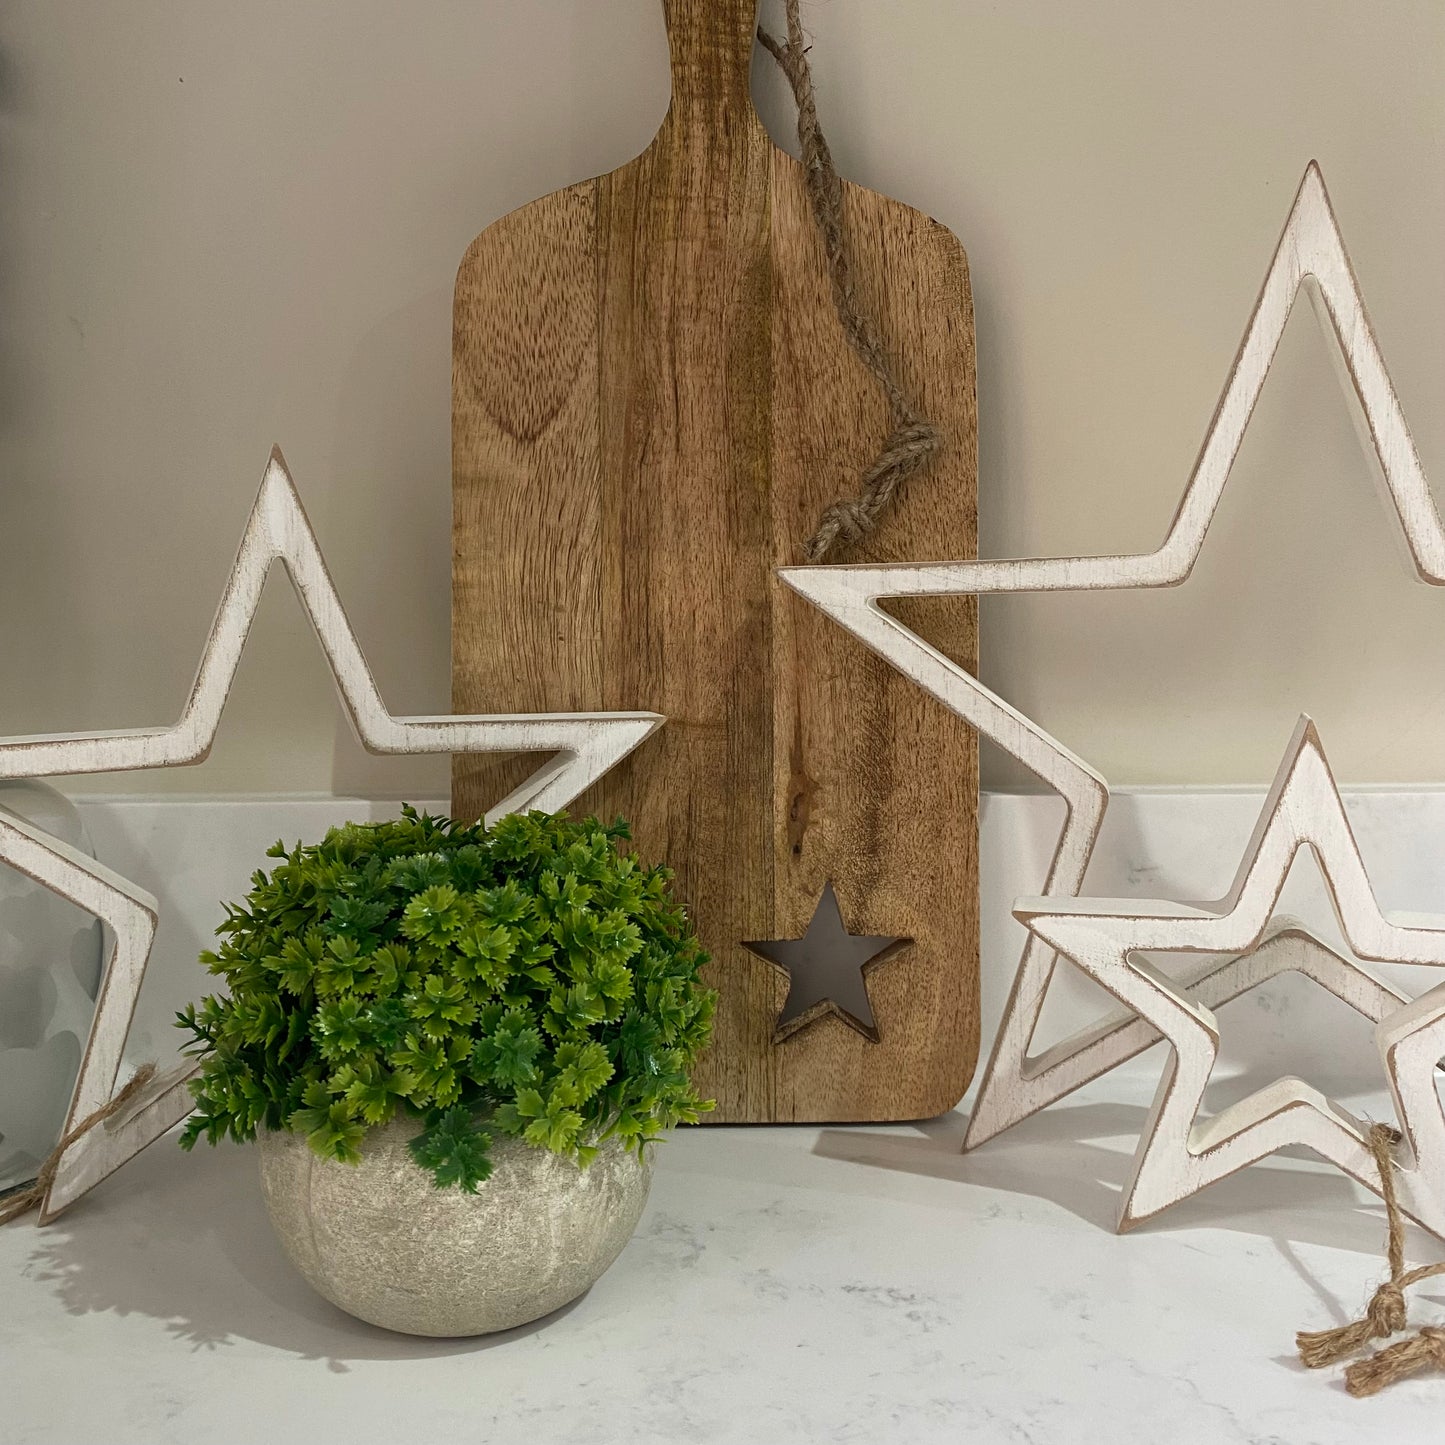 White Wood Stars - set of 4